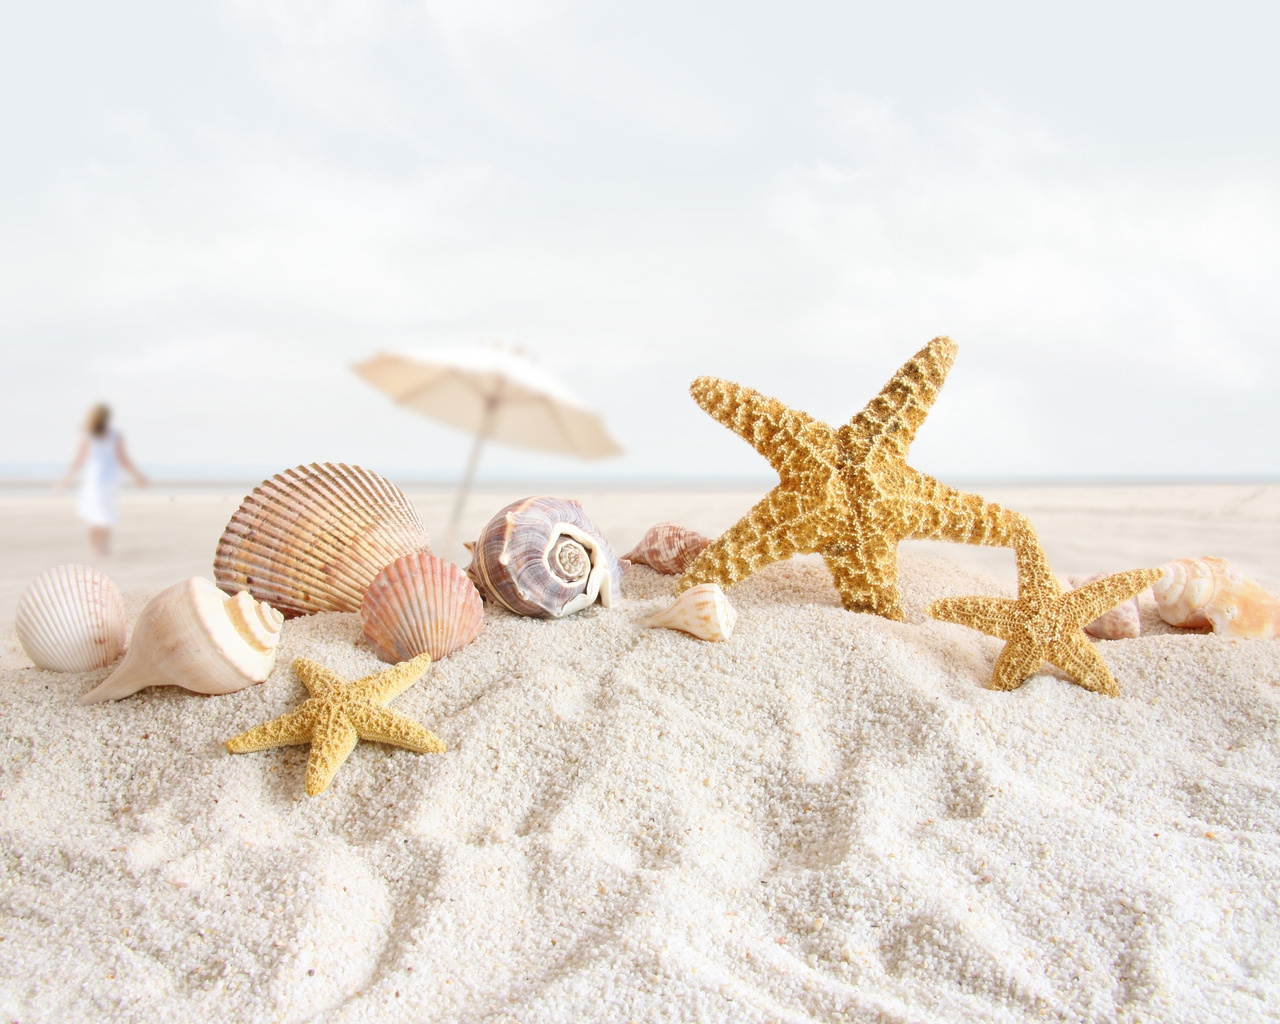 Seashells and Starfish for 1280 x 1024 resolution